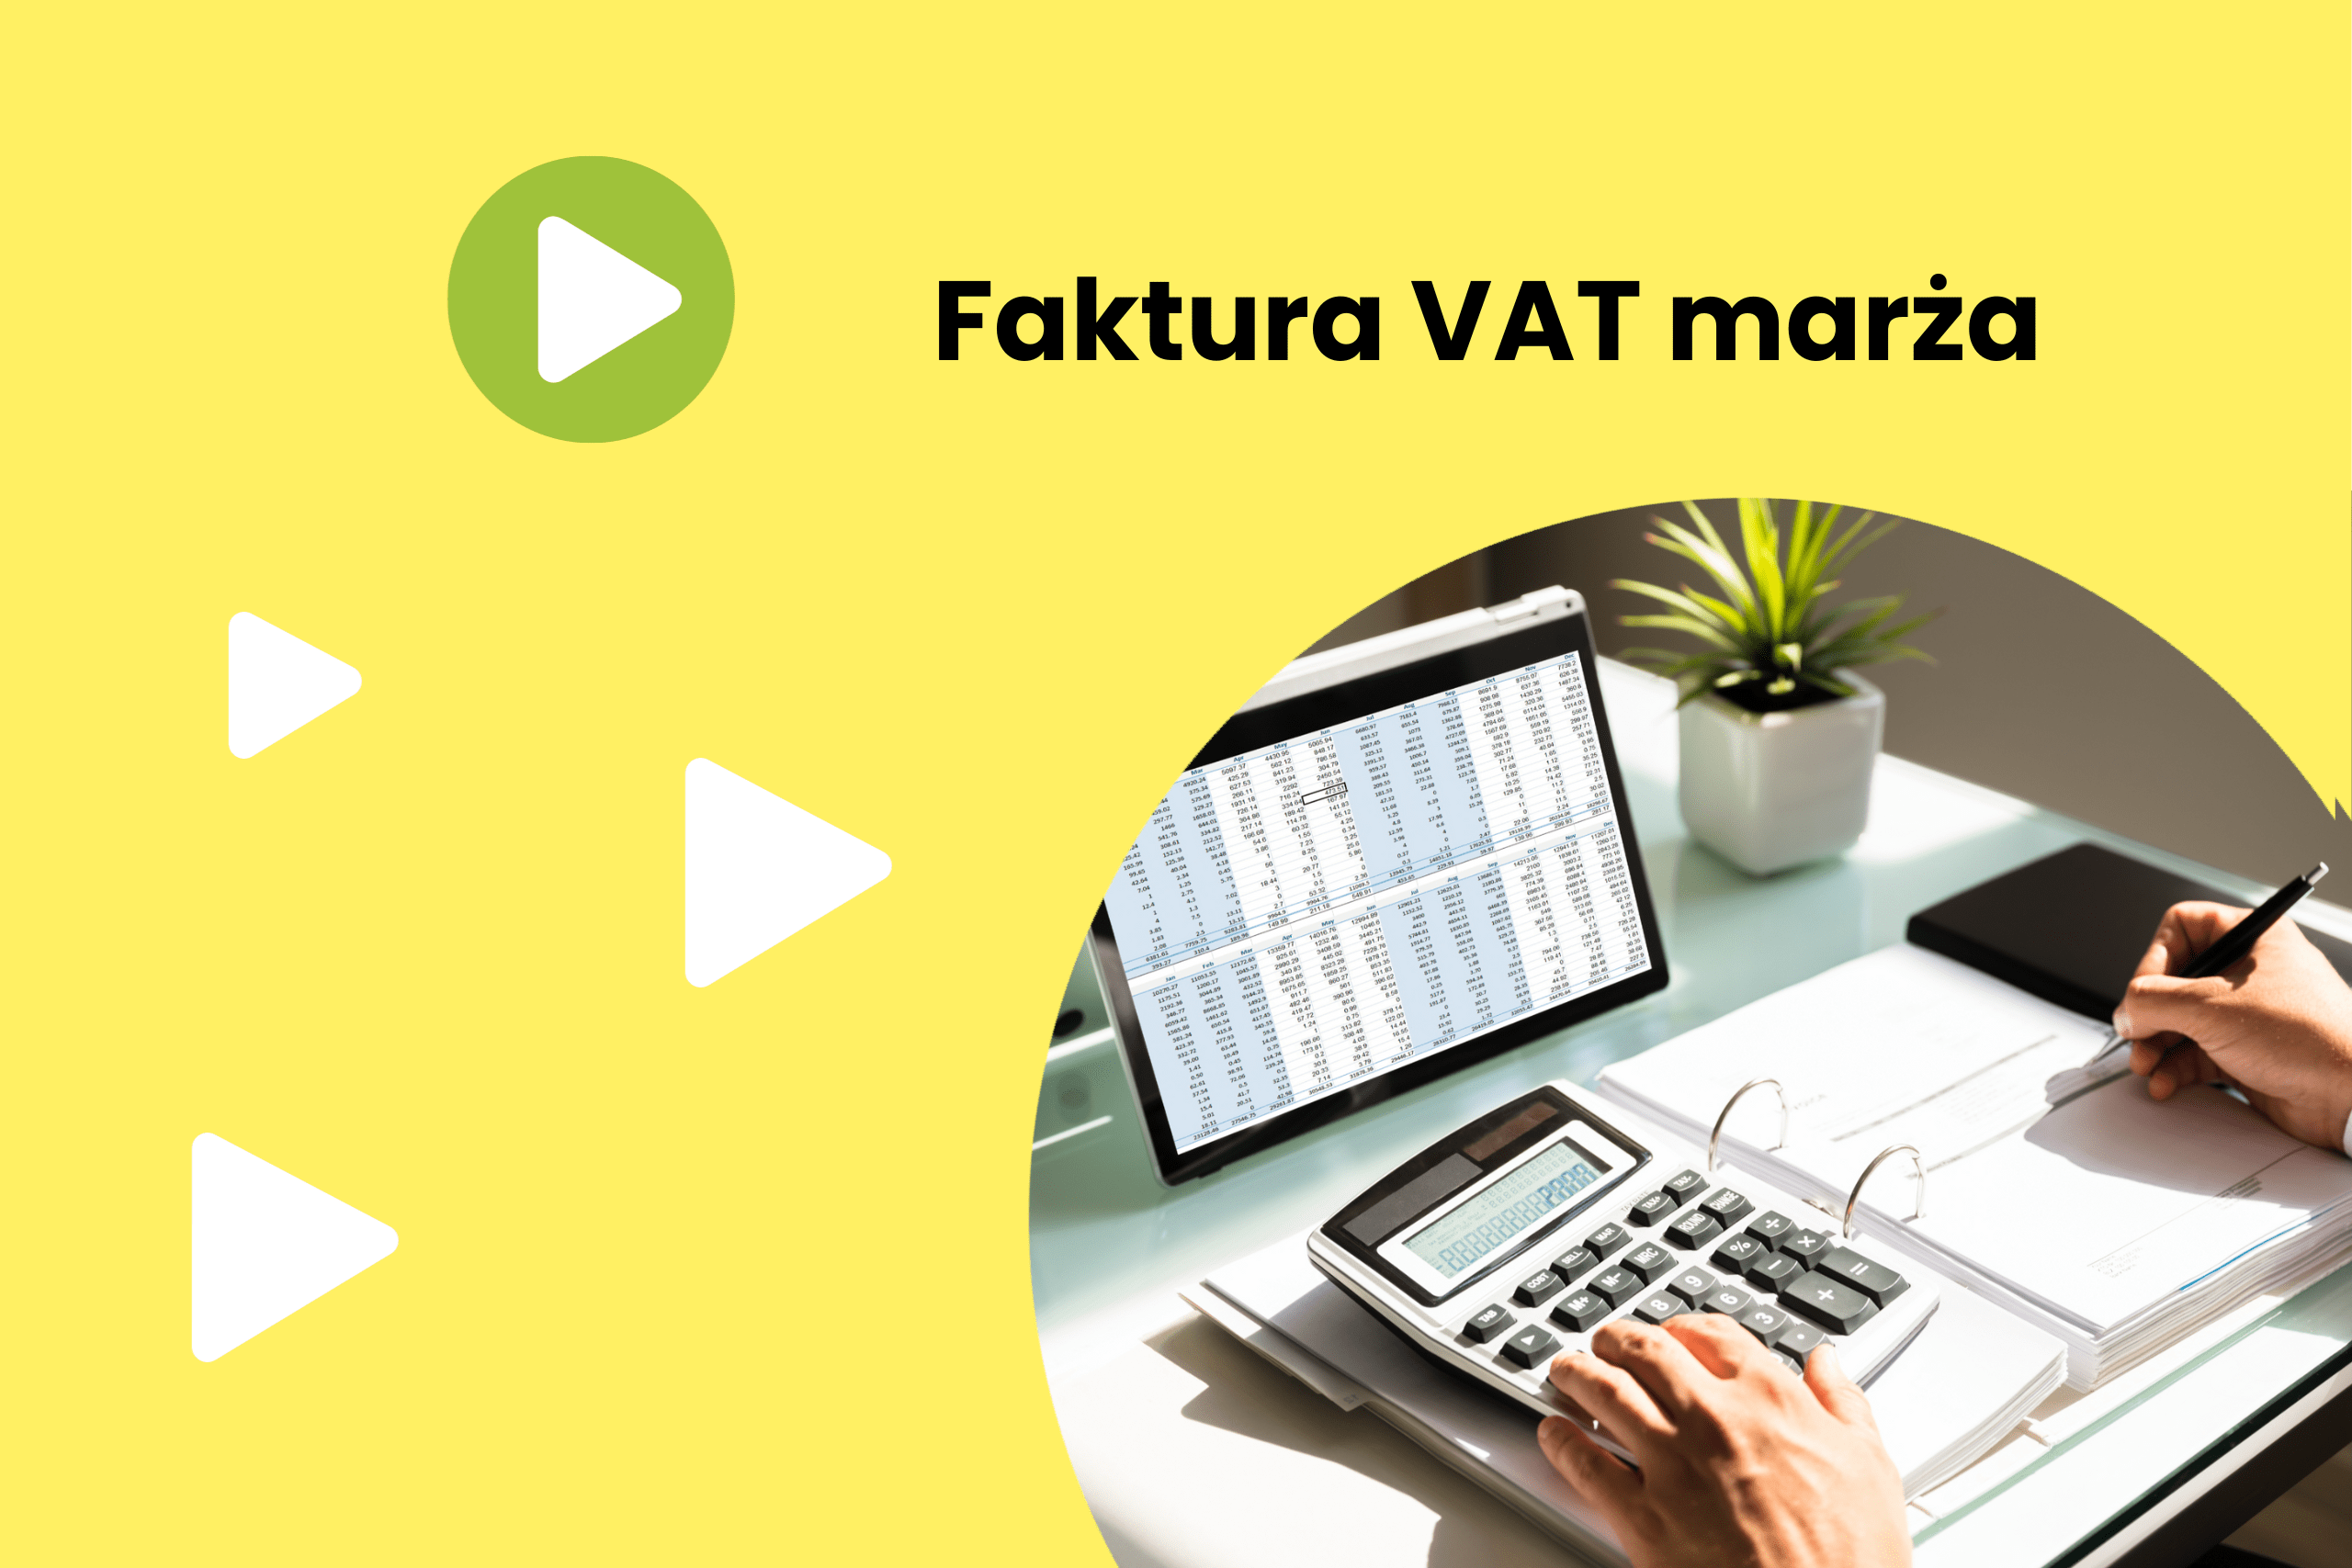 Faktura VAT marża − jak ją wystawić?